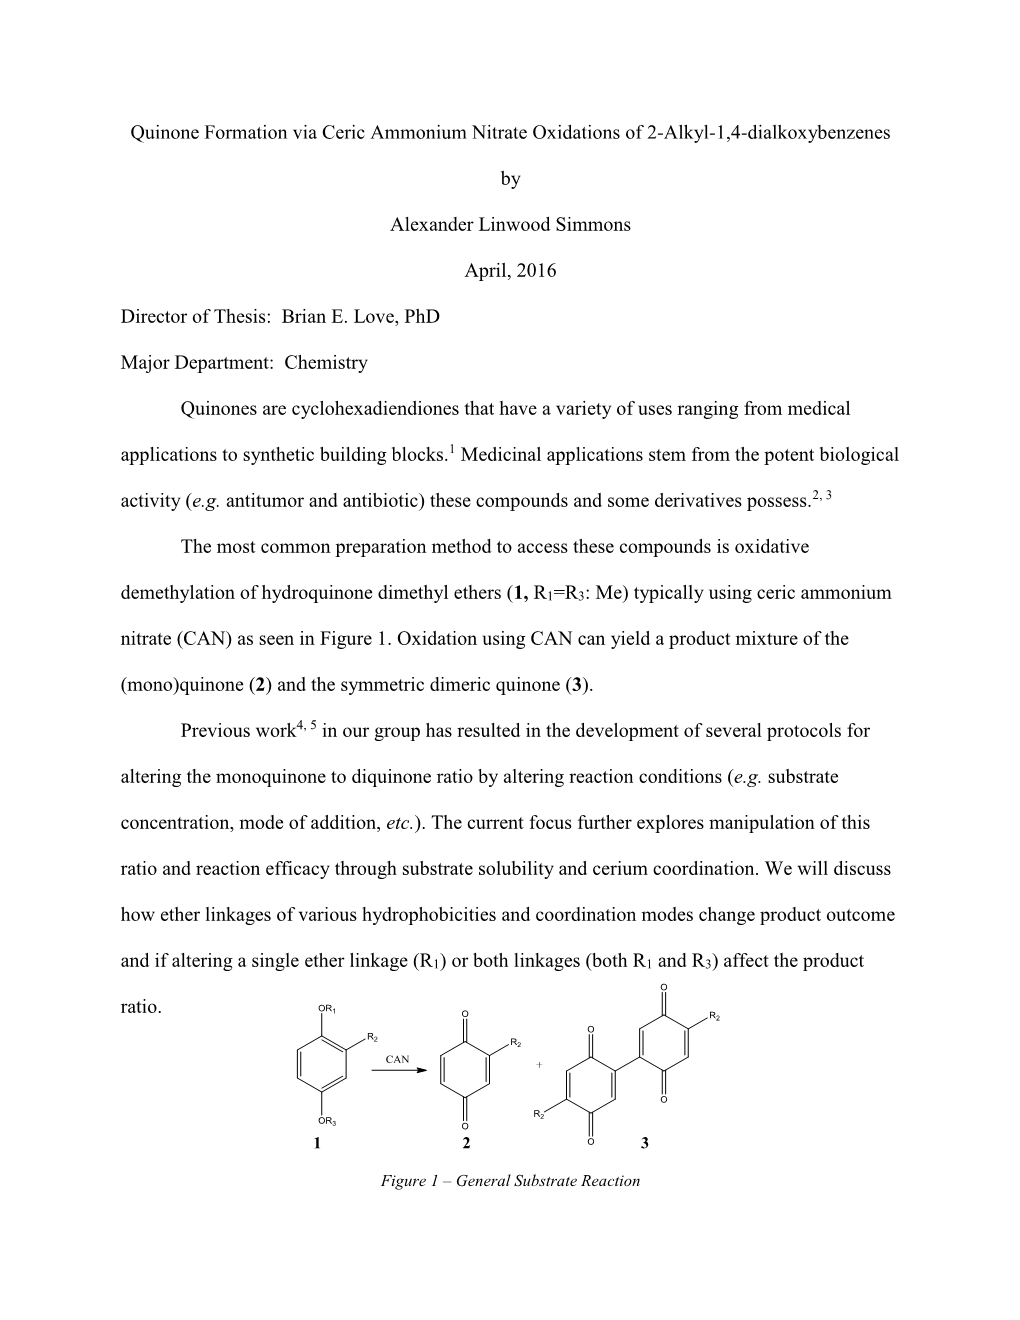 Quinone Formation Via Ceric Ammonium Nitrate Oxidations of 2-Alkyl-1,4-Dialkoxybenzenes